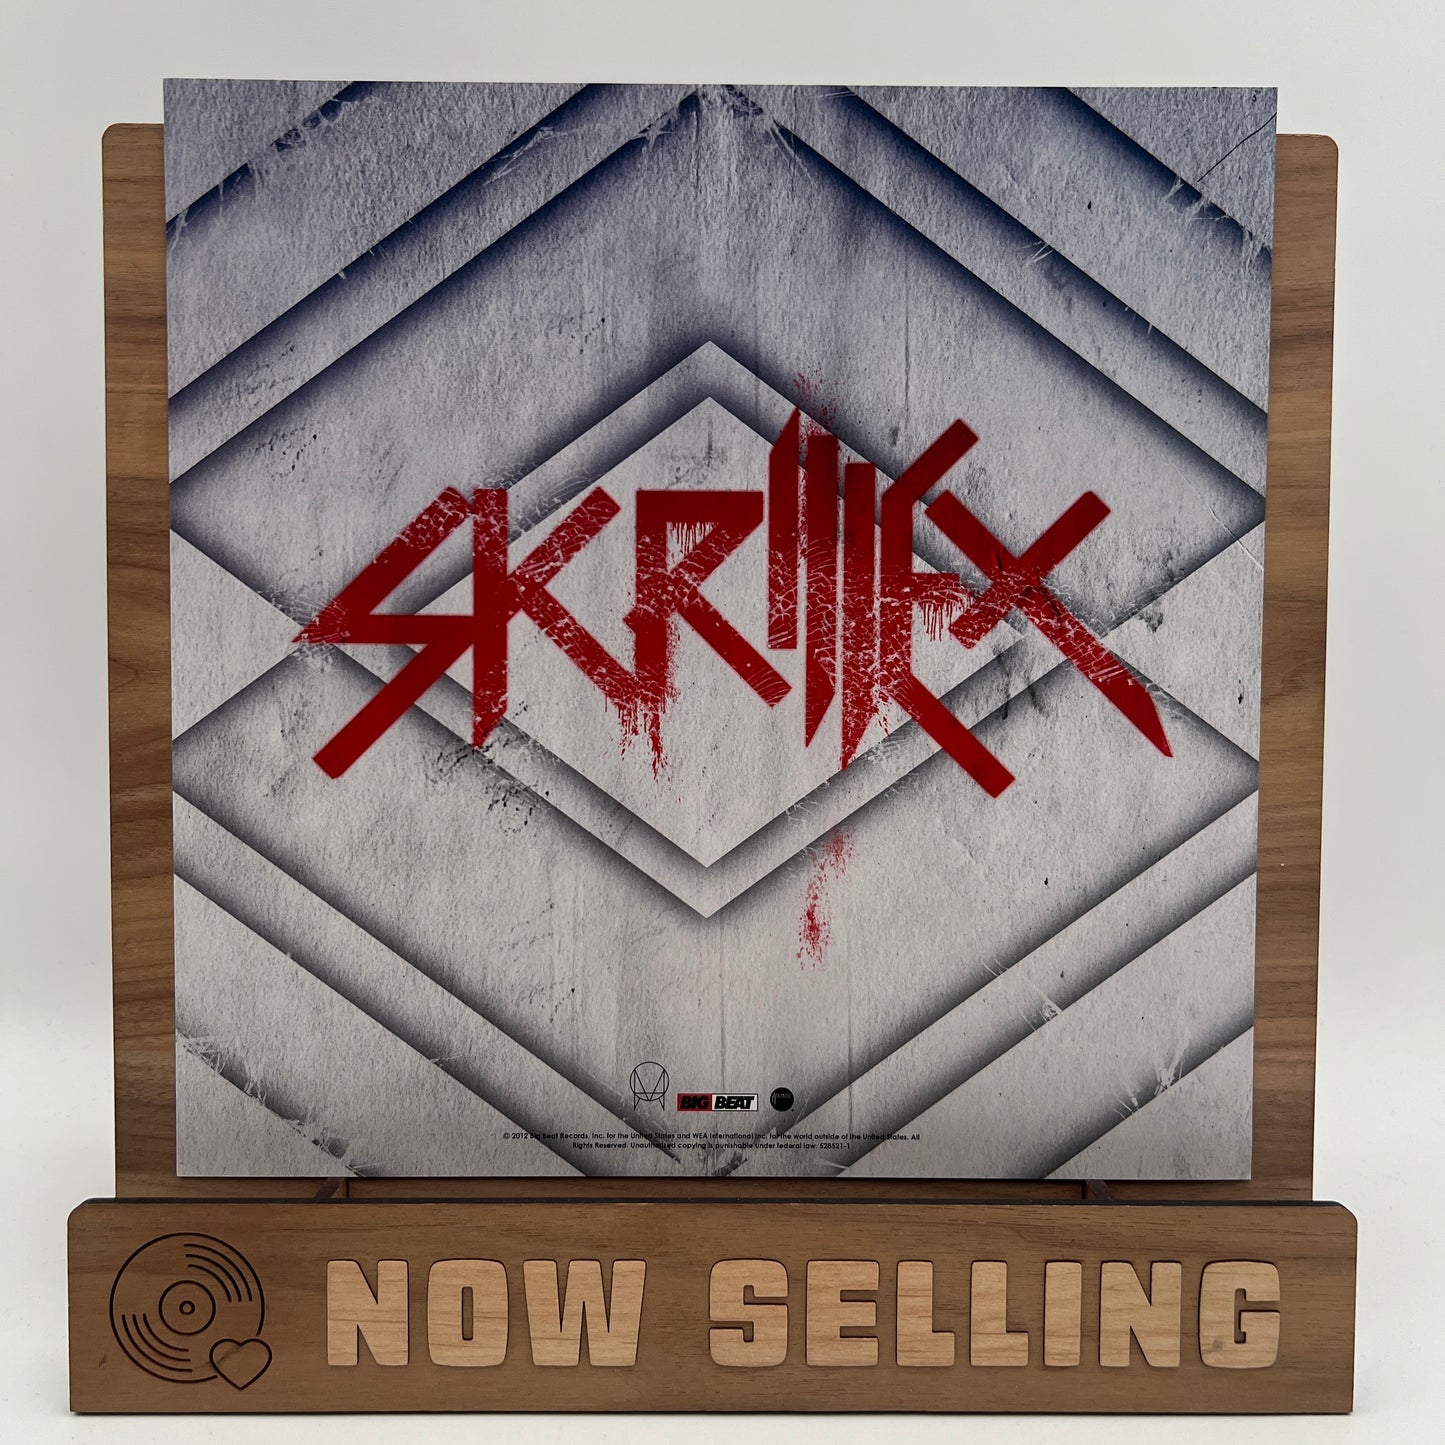 Skrillex - Bangarang Vinyl EP 180 Gram RSD 2012